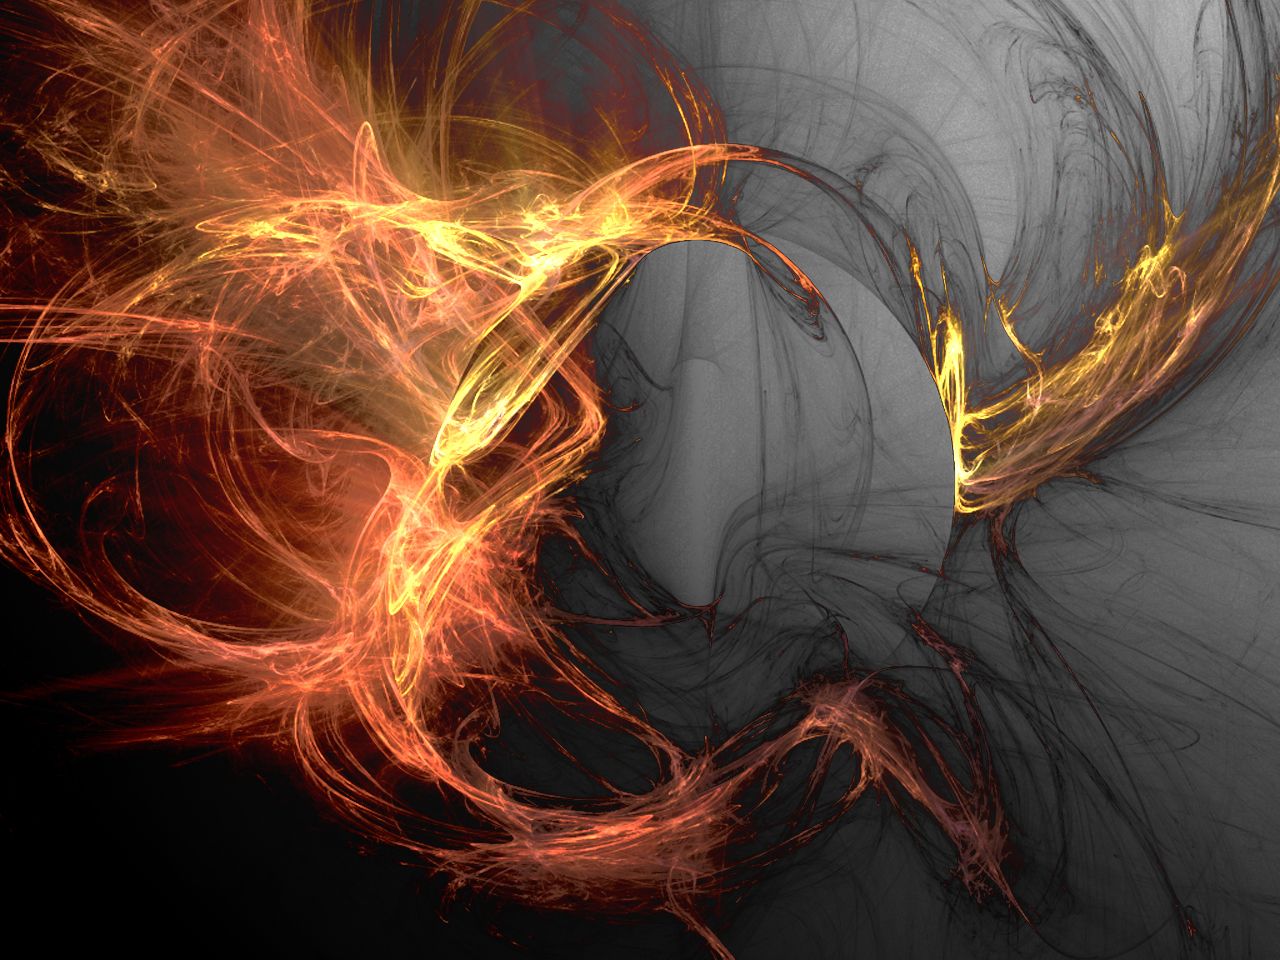 fond d'écran fond d'écran,art fractal,chaleur,flamme,feu,orange